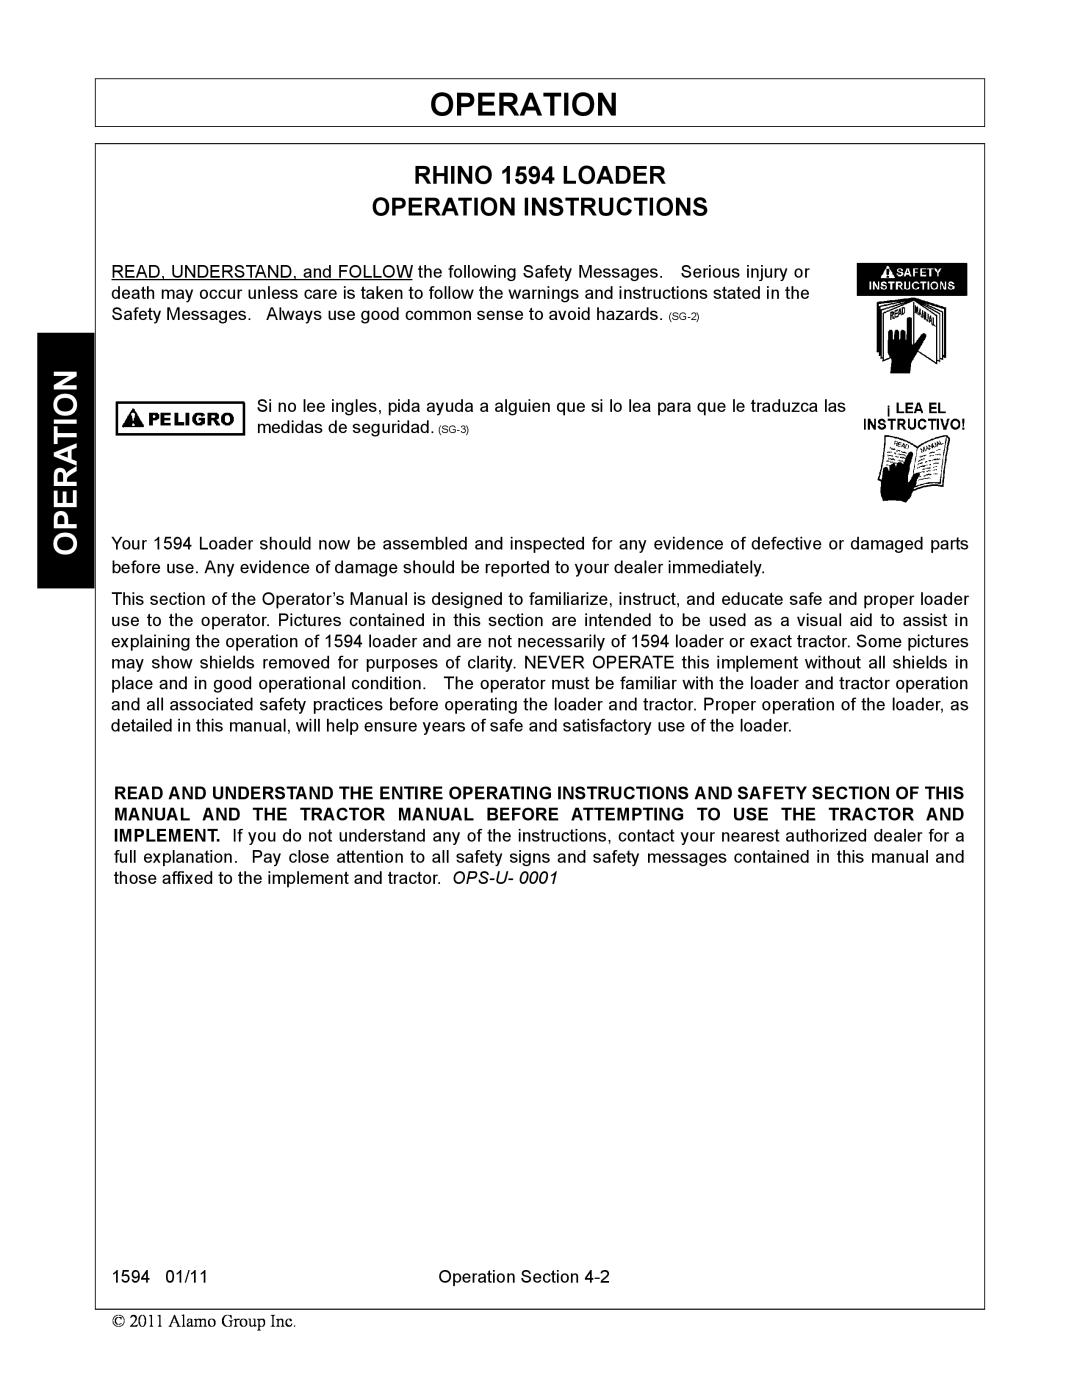 Rhino Mounts manual Operation, RHINO 1594 LOADER OPERATION INSTRUCTIONS 